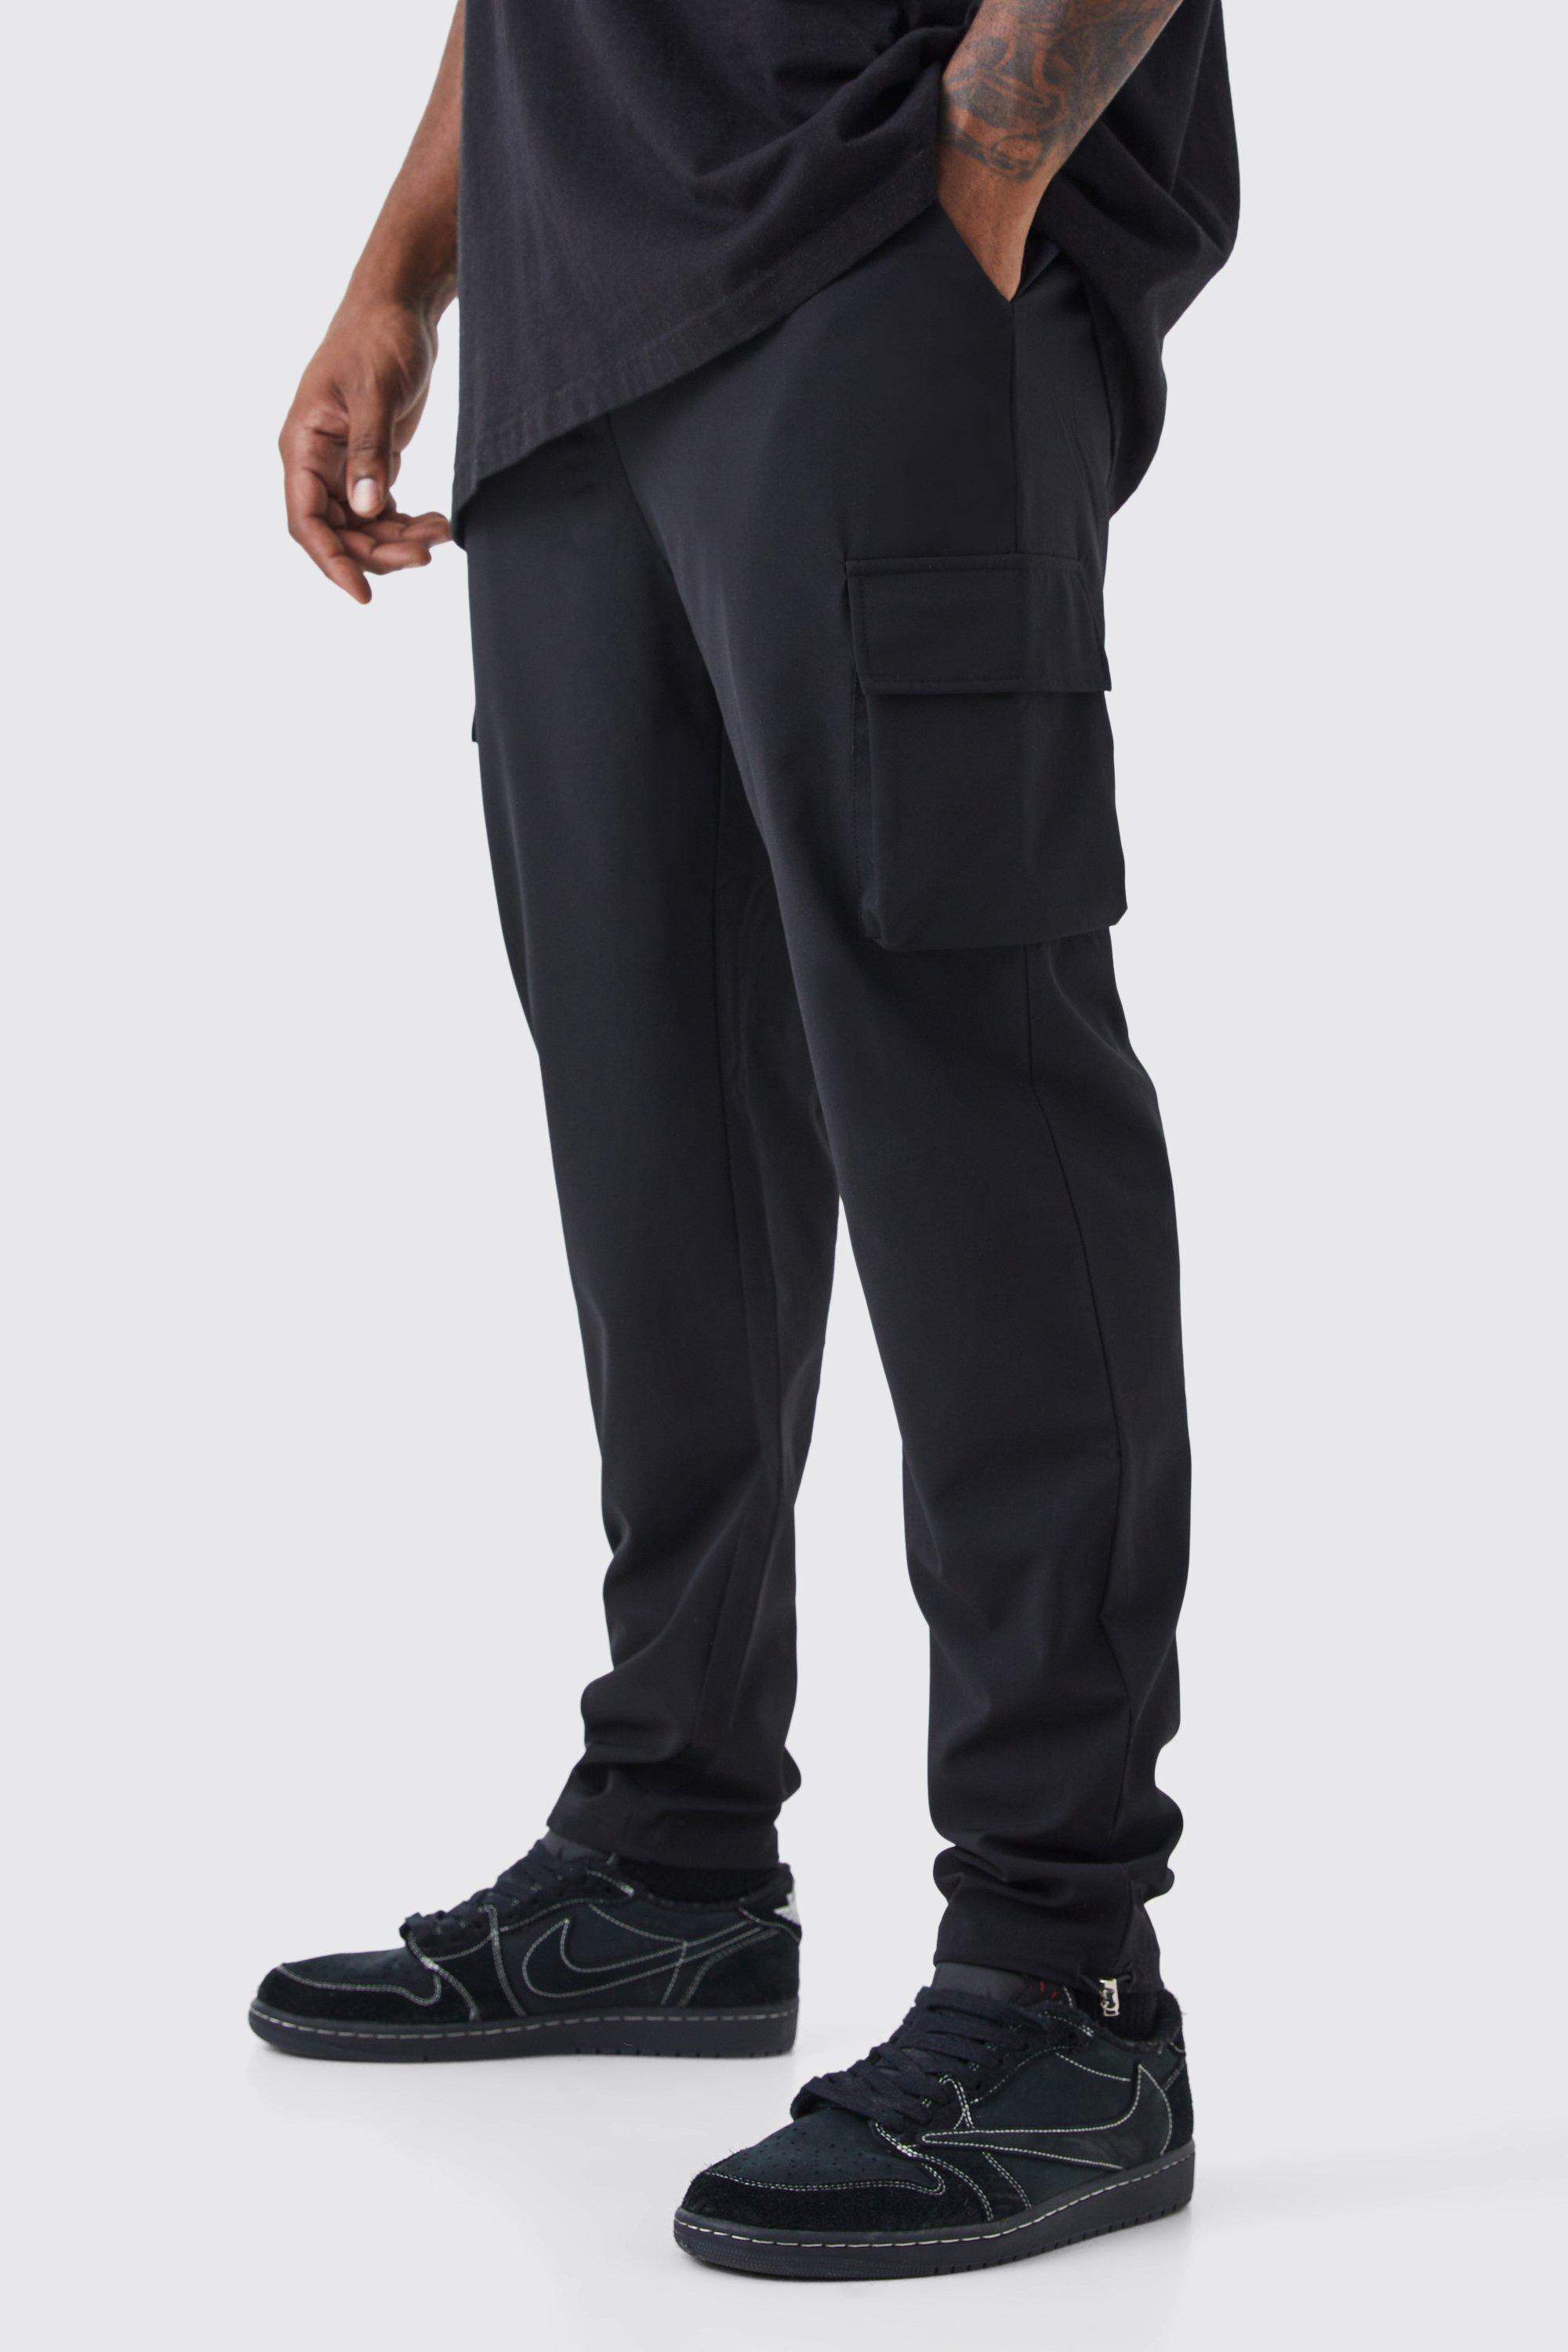 grande taille - pantalon cargo skinny léger homme - noir - xxl, noir